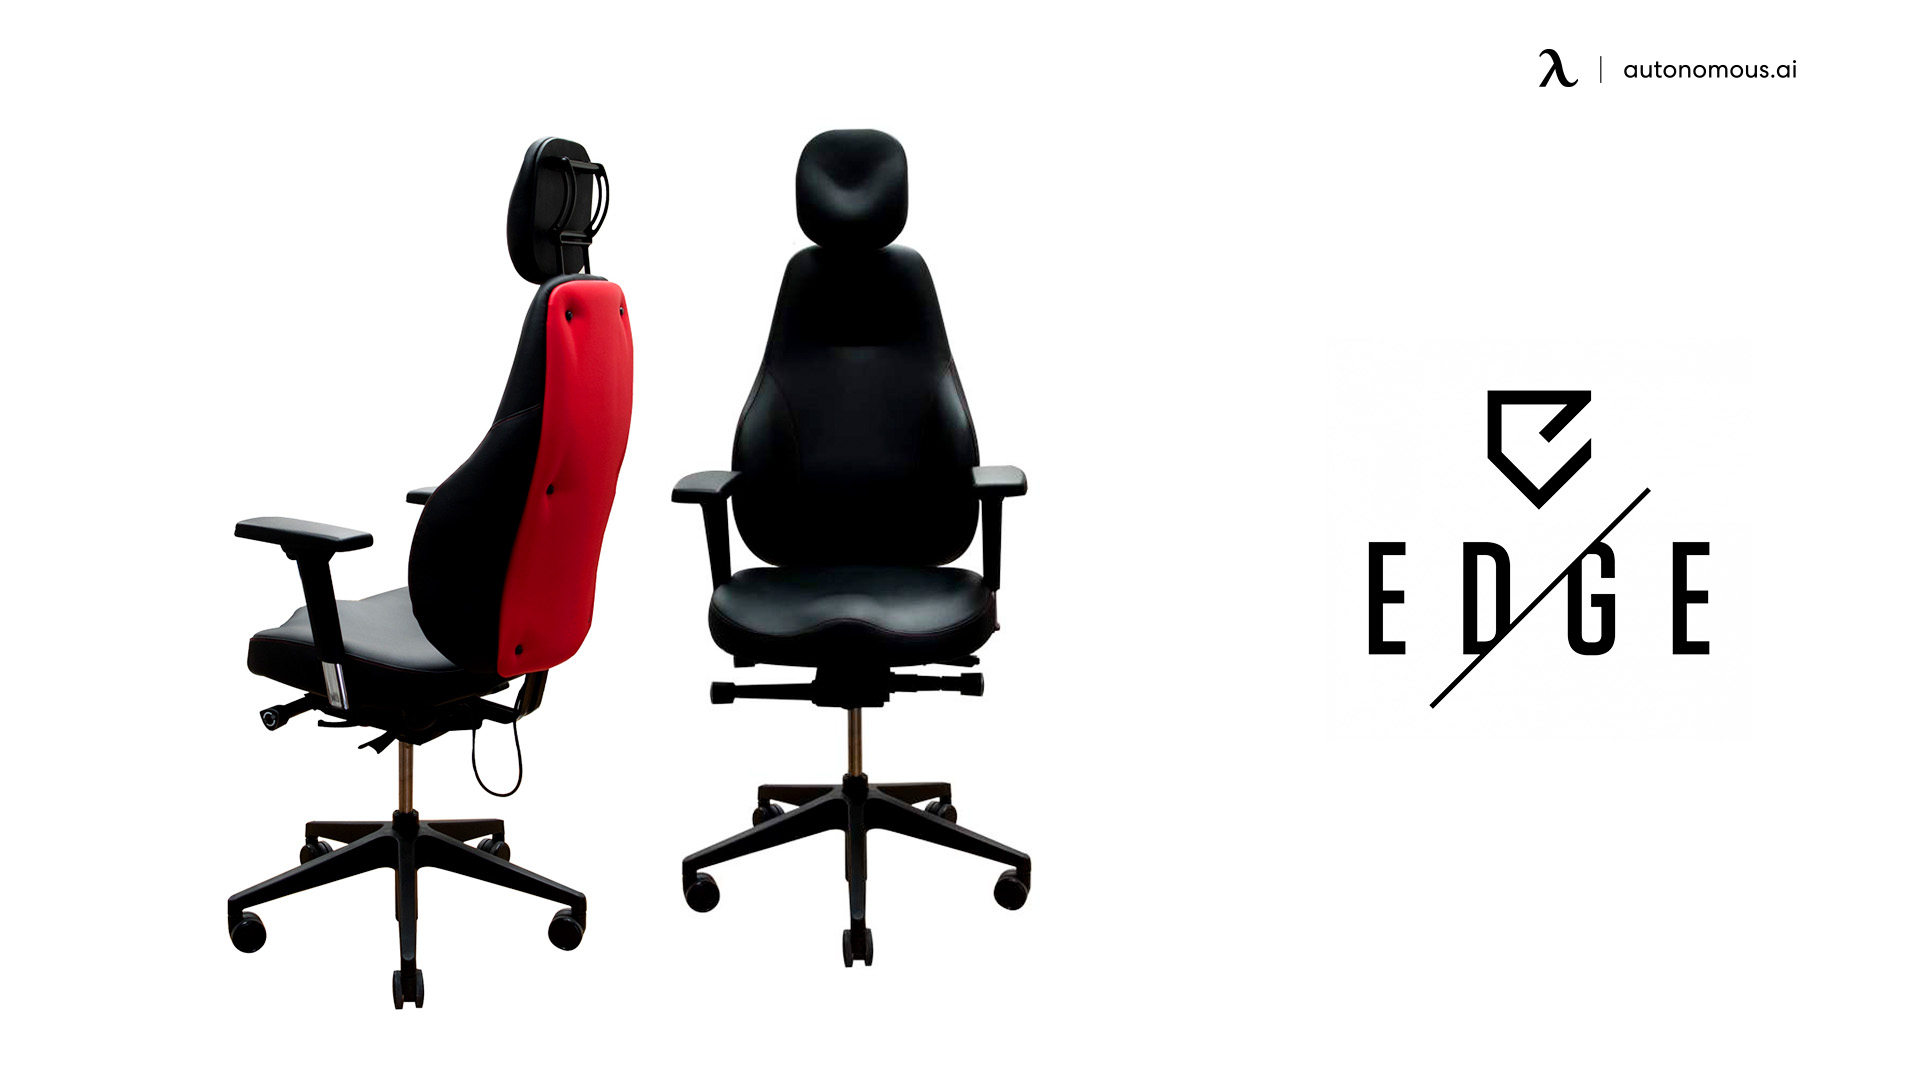 Edge gaming chair brand